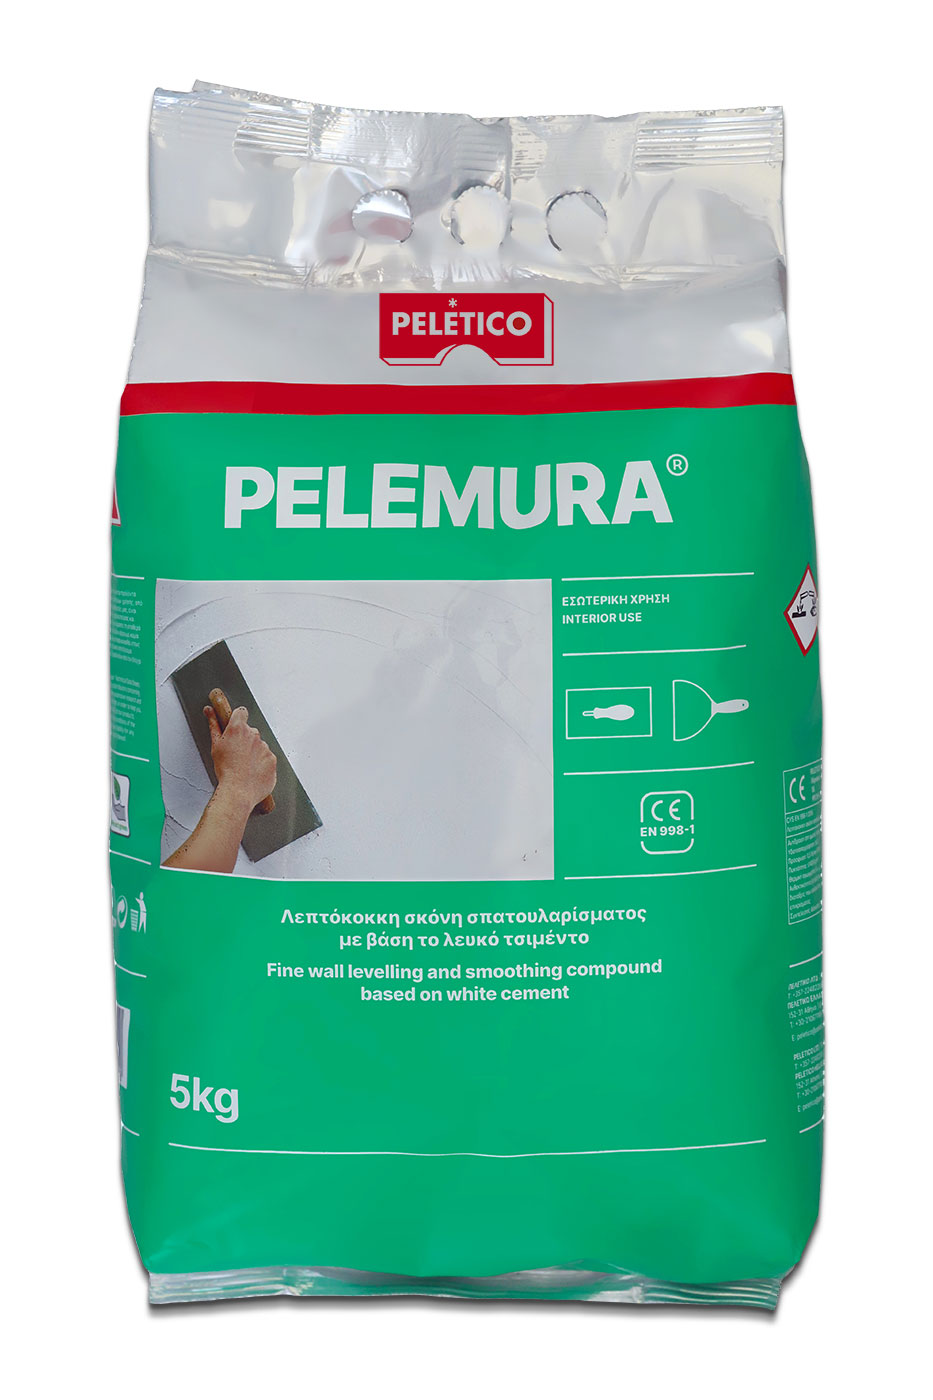 PELEMURA® INTERIOR THIN GREAT PATTERNING POWDER 5KG